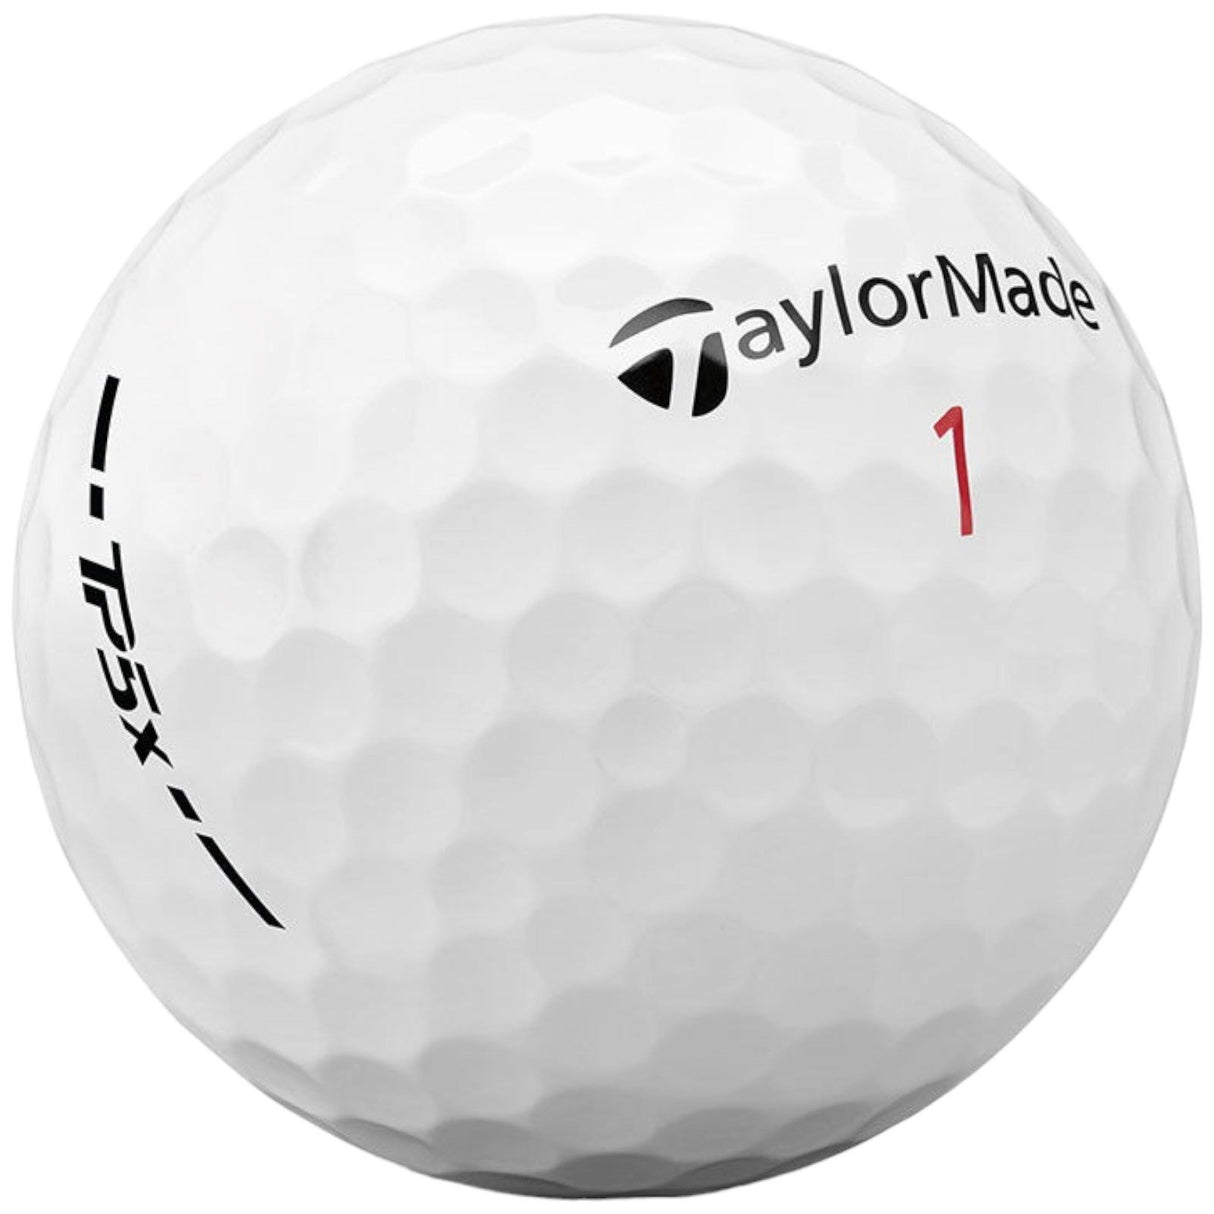 Taylormade TP5X 23 Golf Ball White